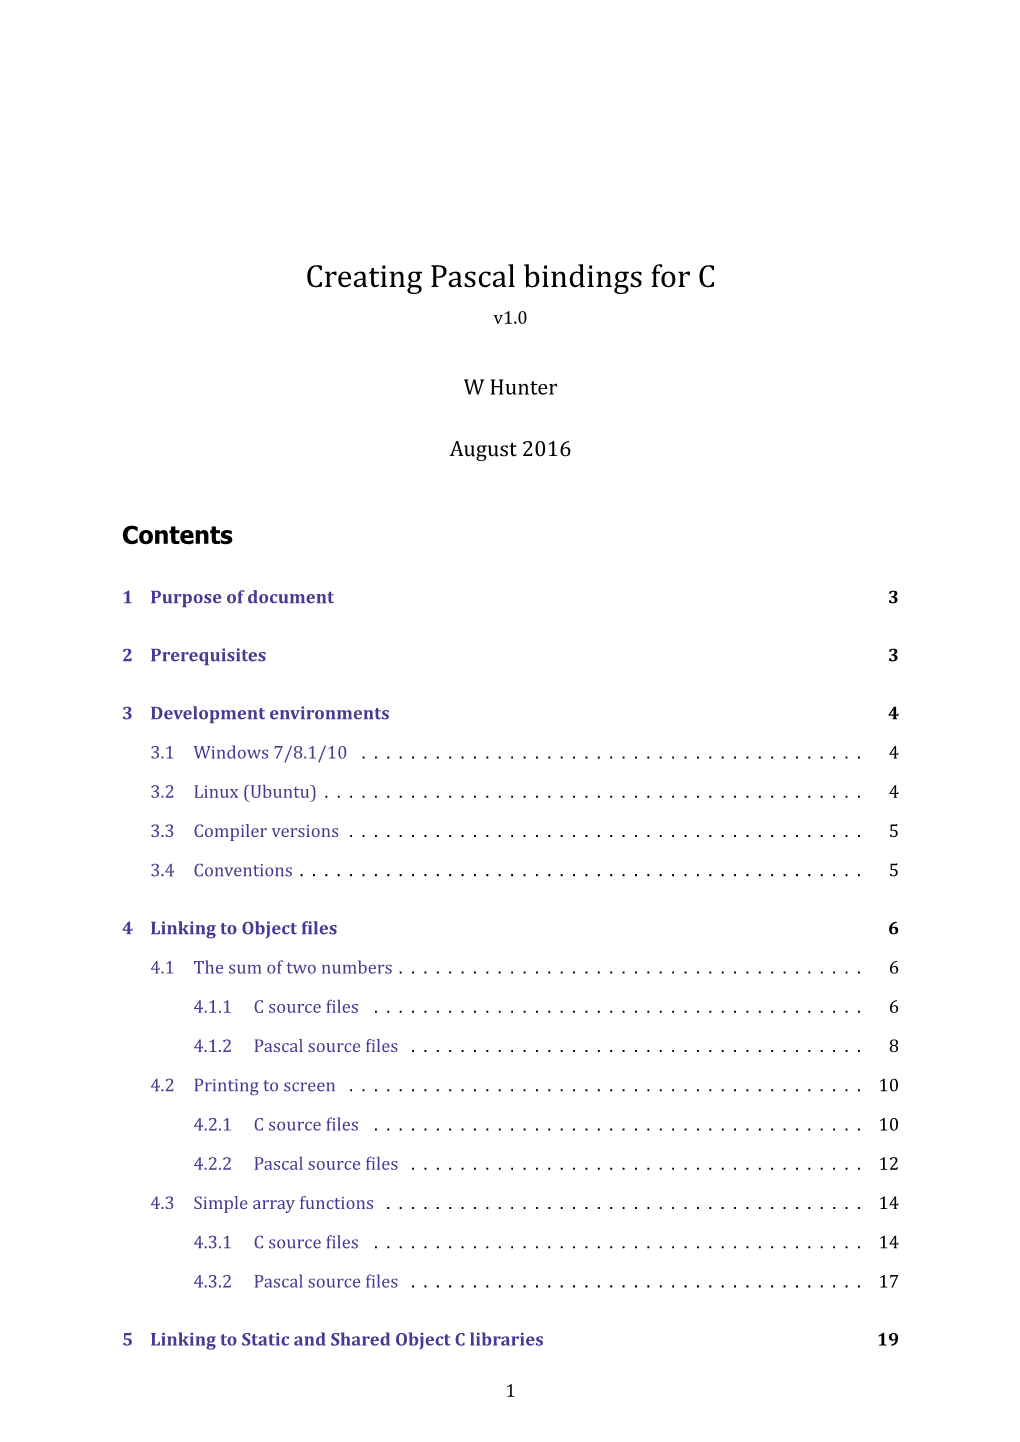 Creating Pascal Bindings for C V1.0